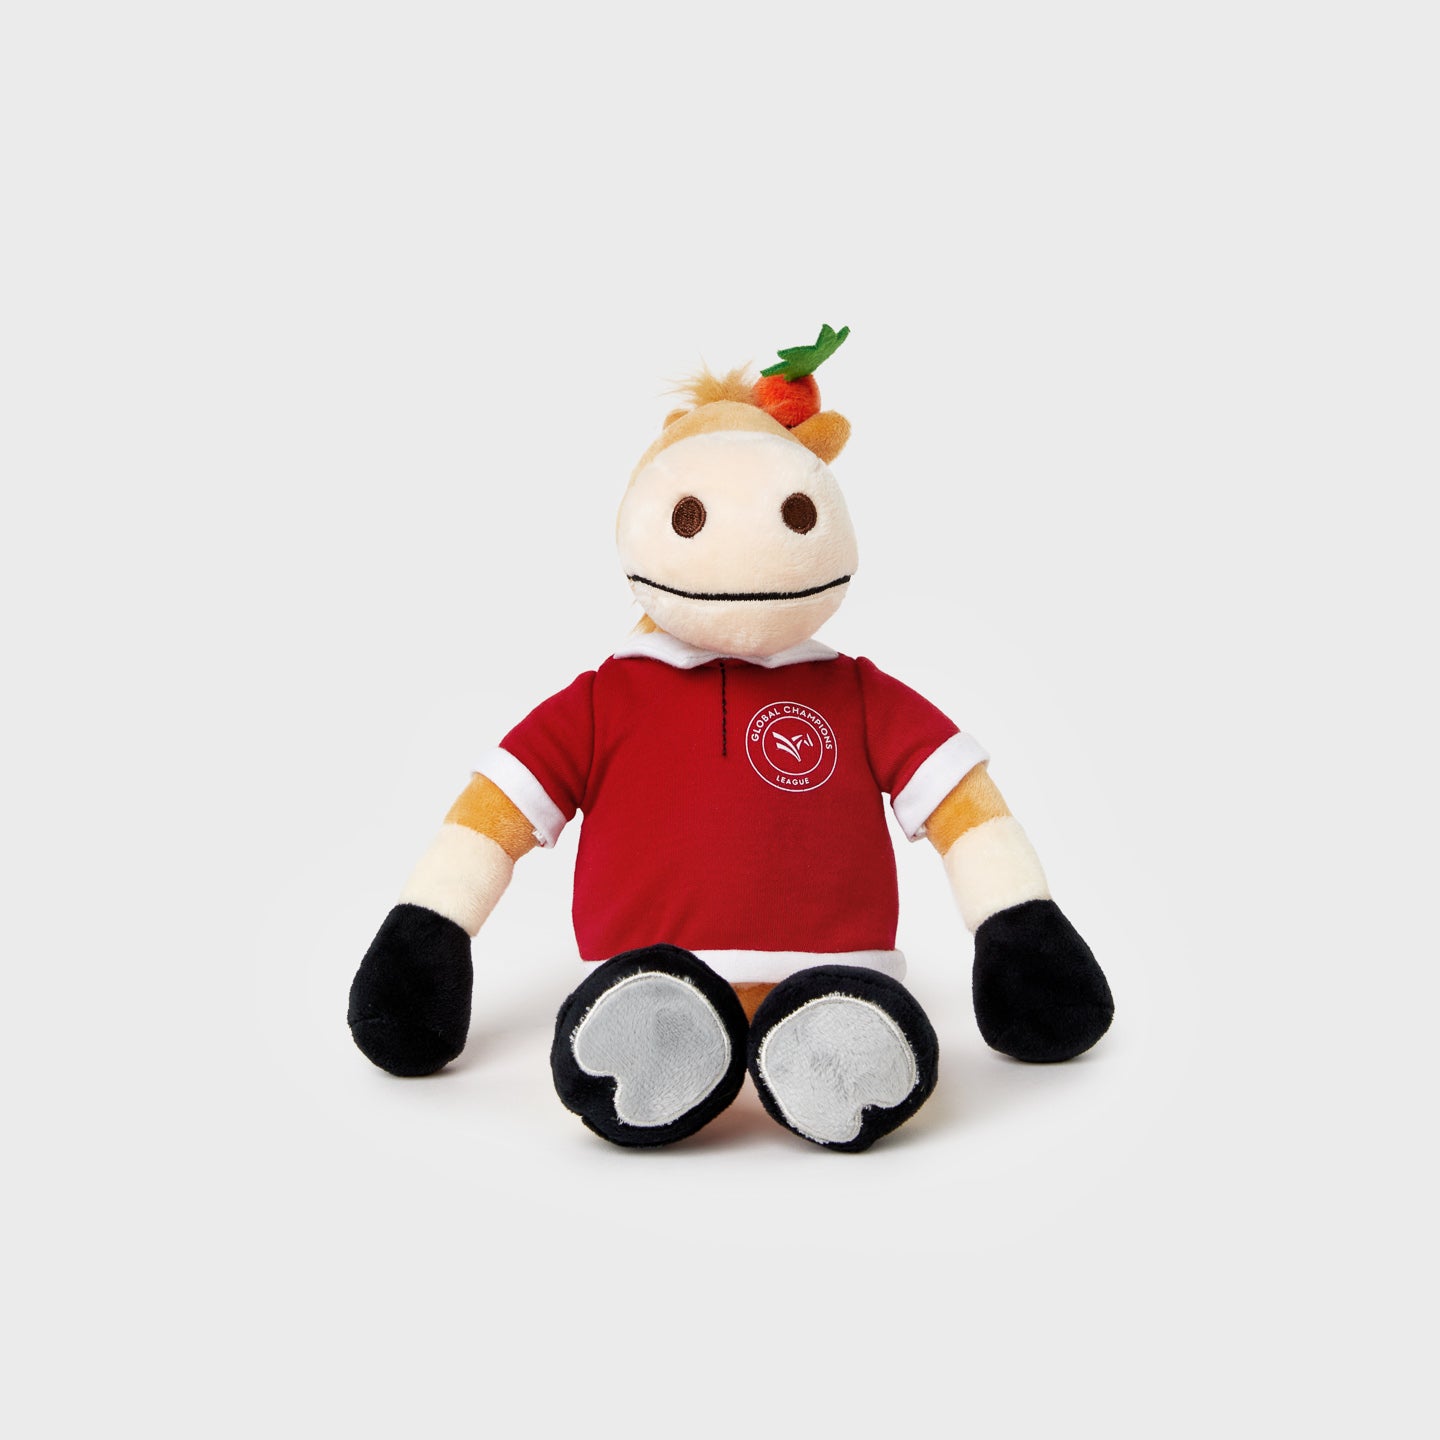 GCL 30cm Mascot Plush Toy - Paco